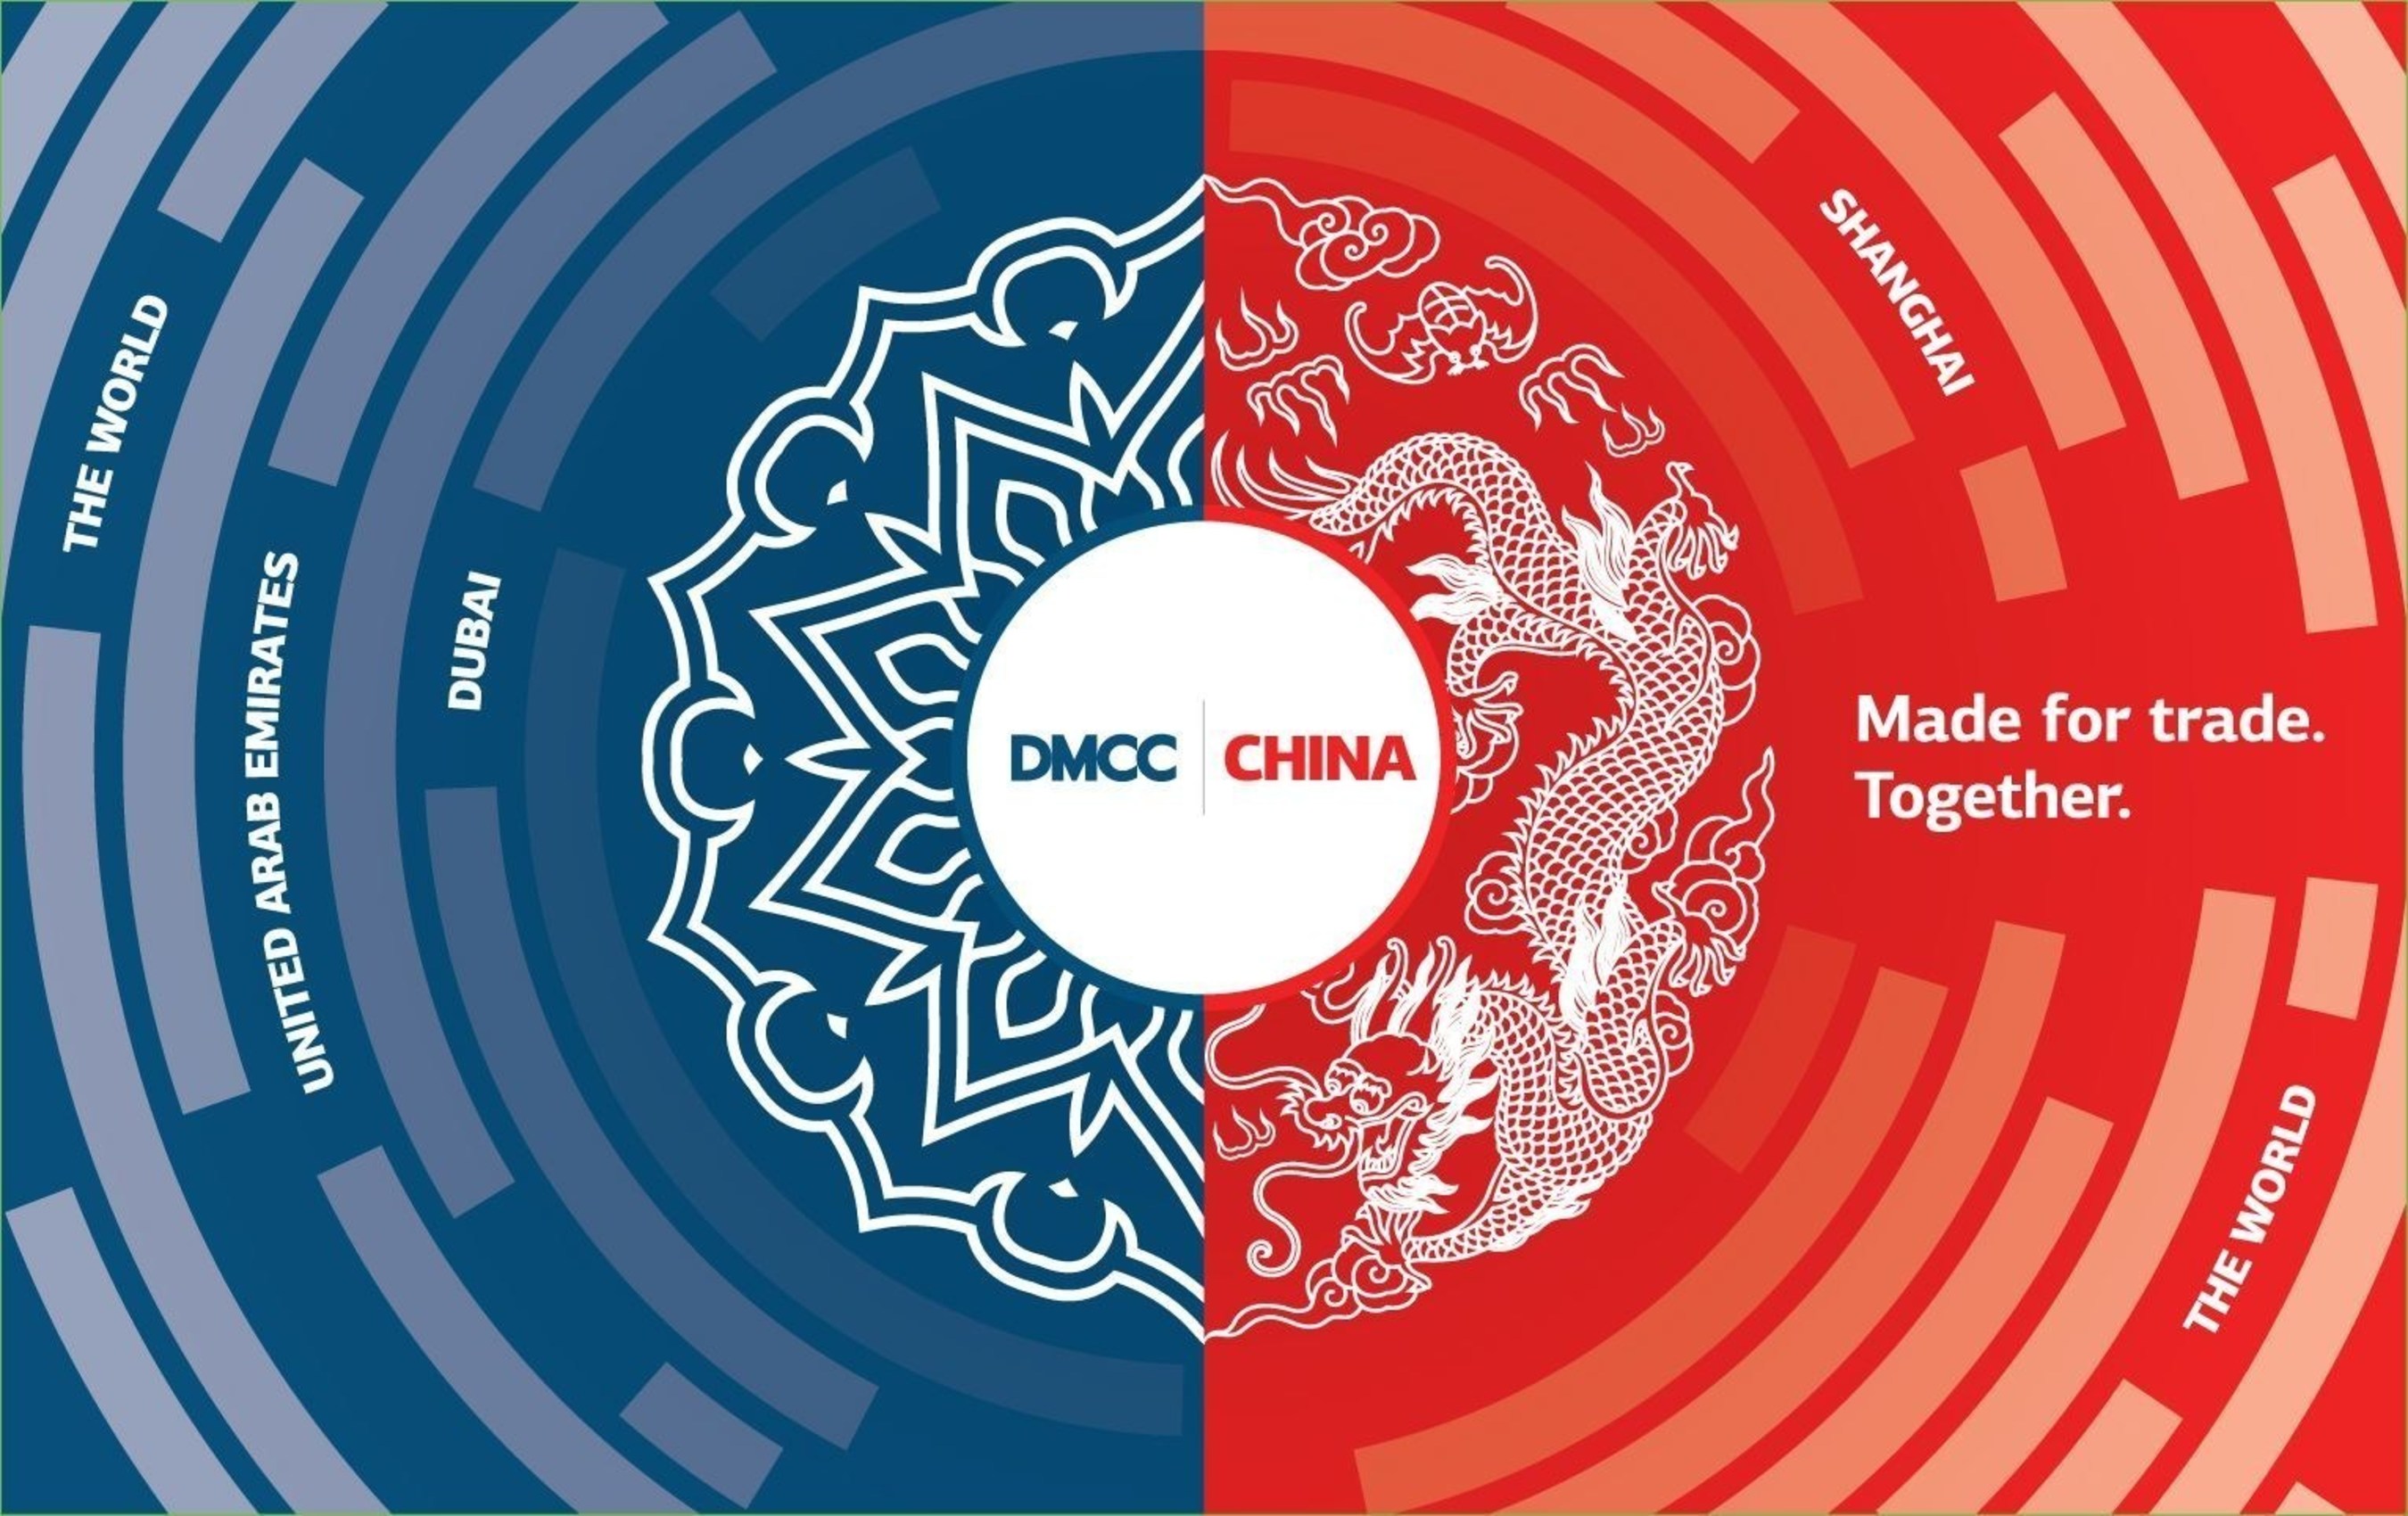 Dubai's DMCC sign major trade agreements in Shanghai, China (PRNewsFoto/DMCC)